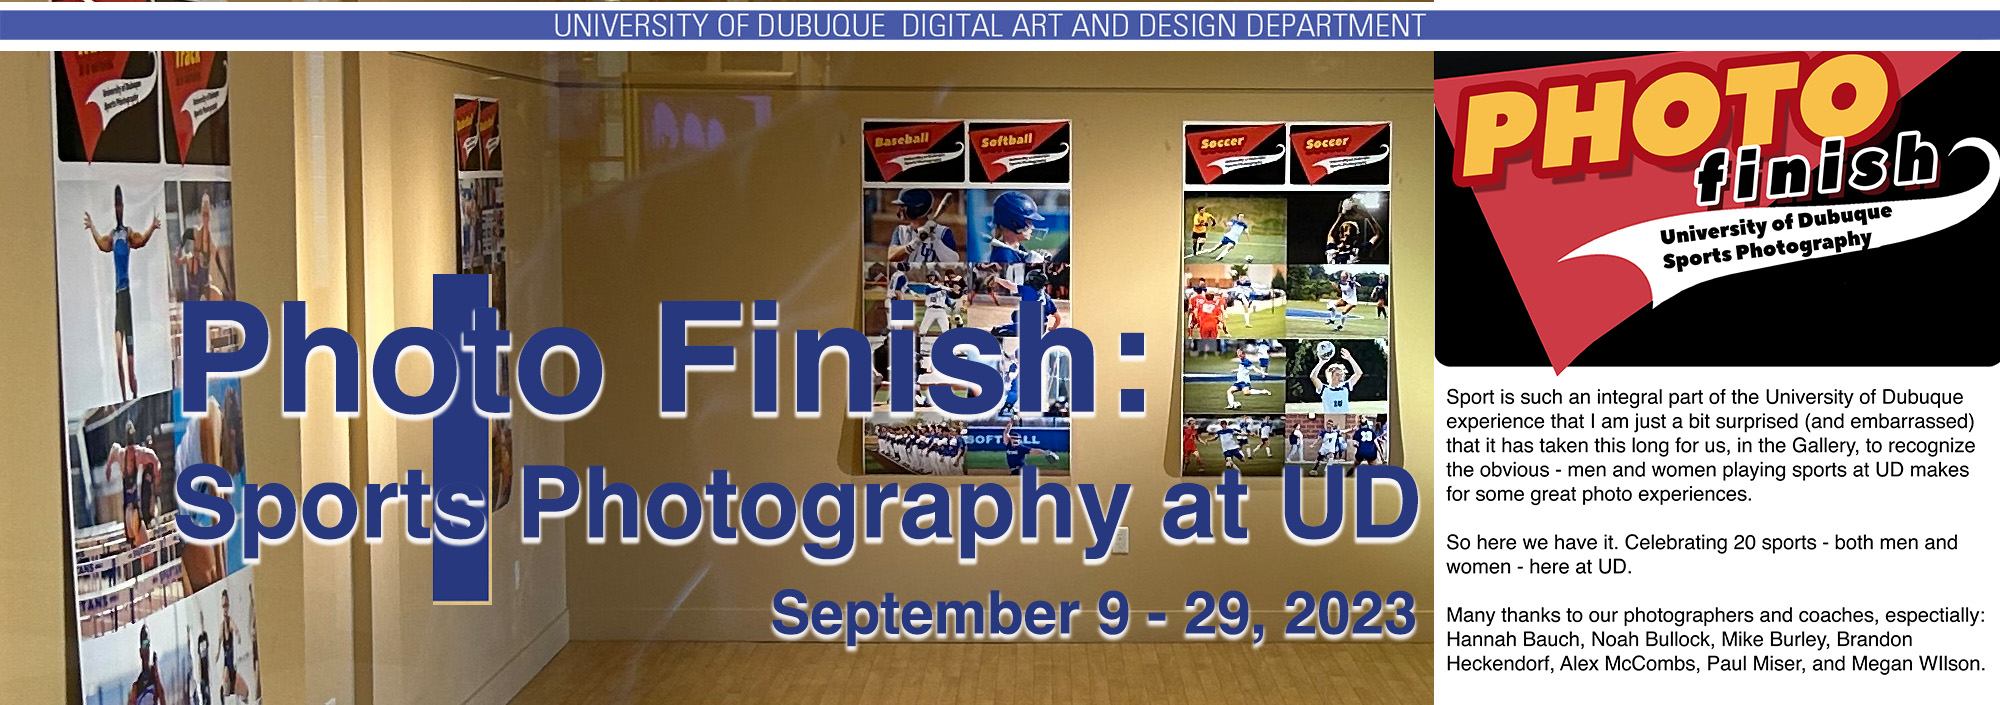 Photo Finish: Sports Photography at UD.